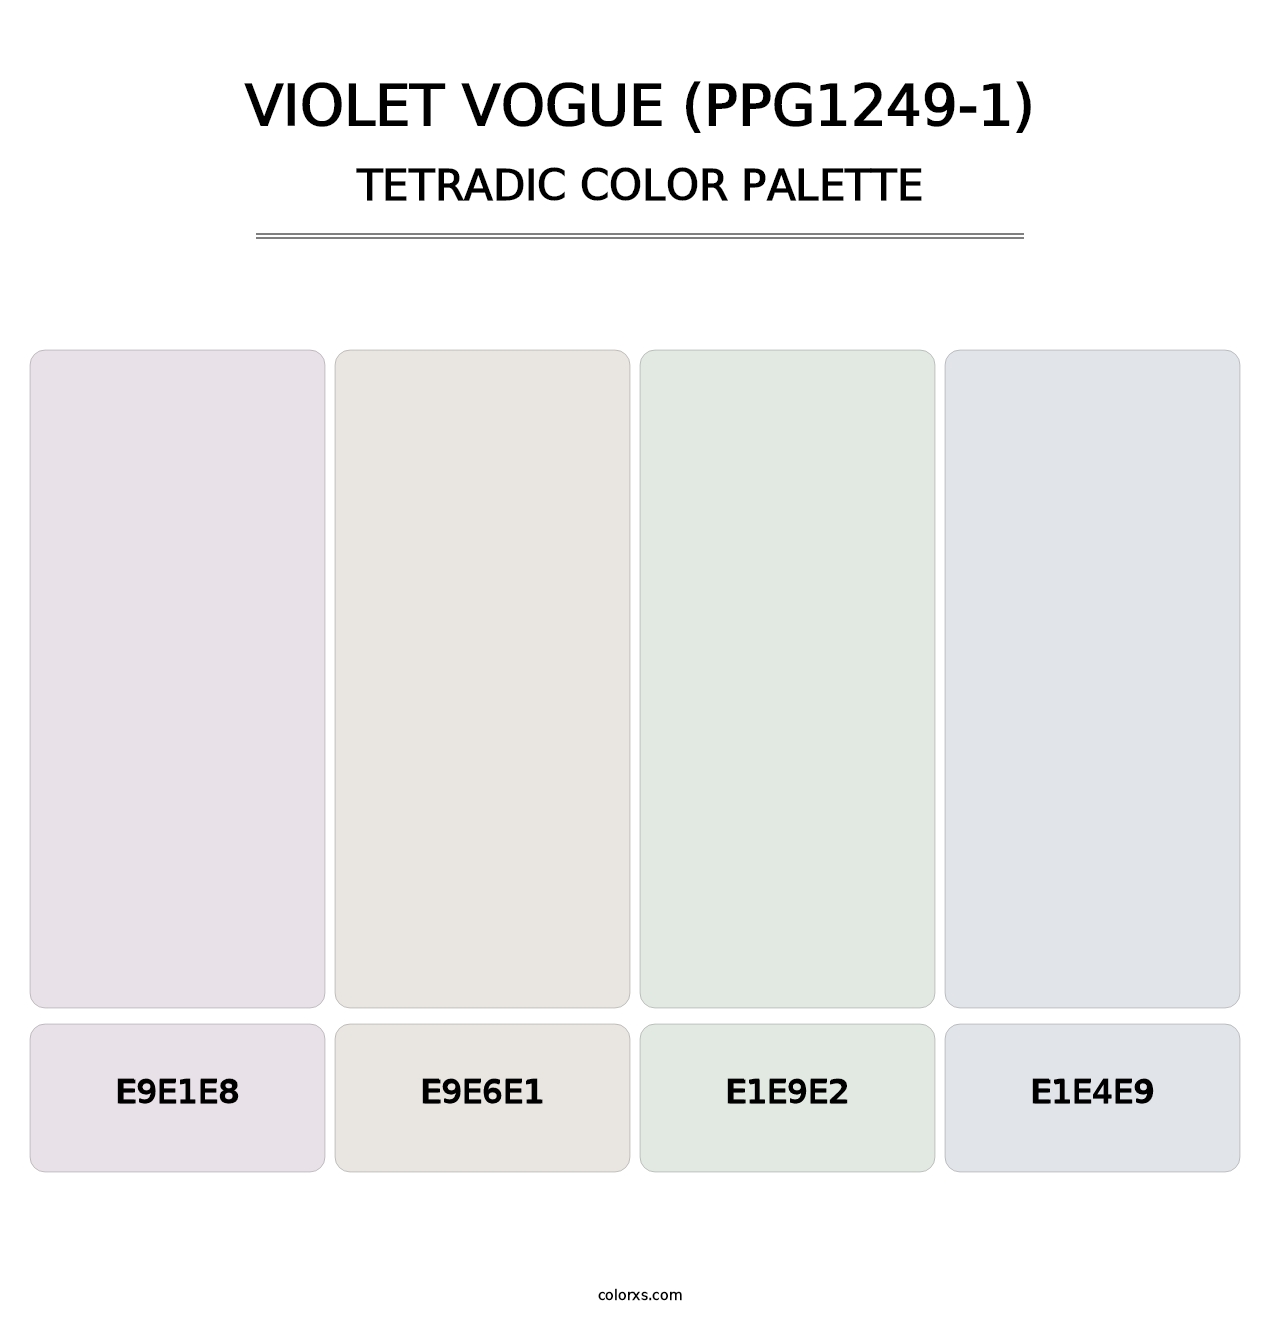 Violet Vogue (PPG1249-1) - Tetradic Color Palette